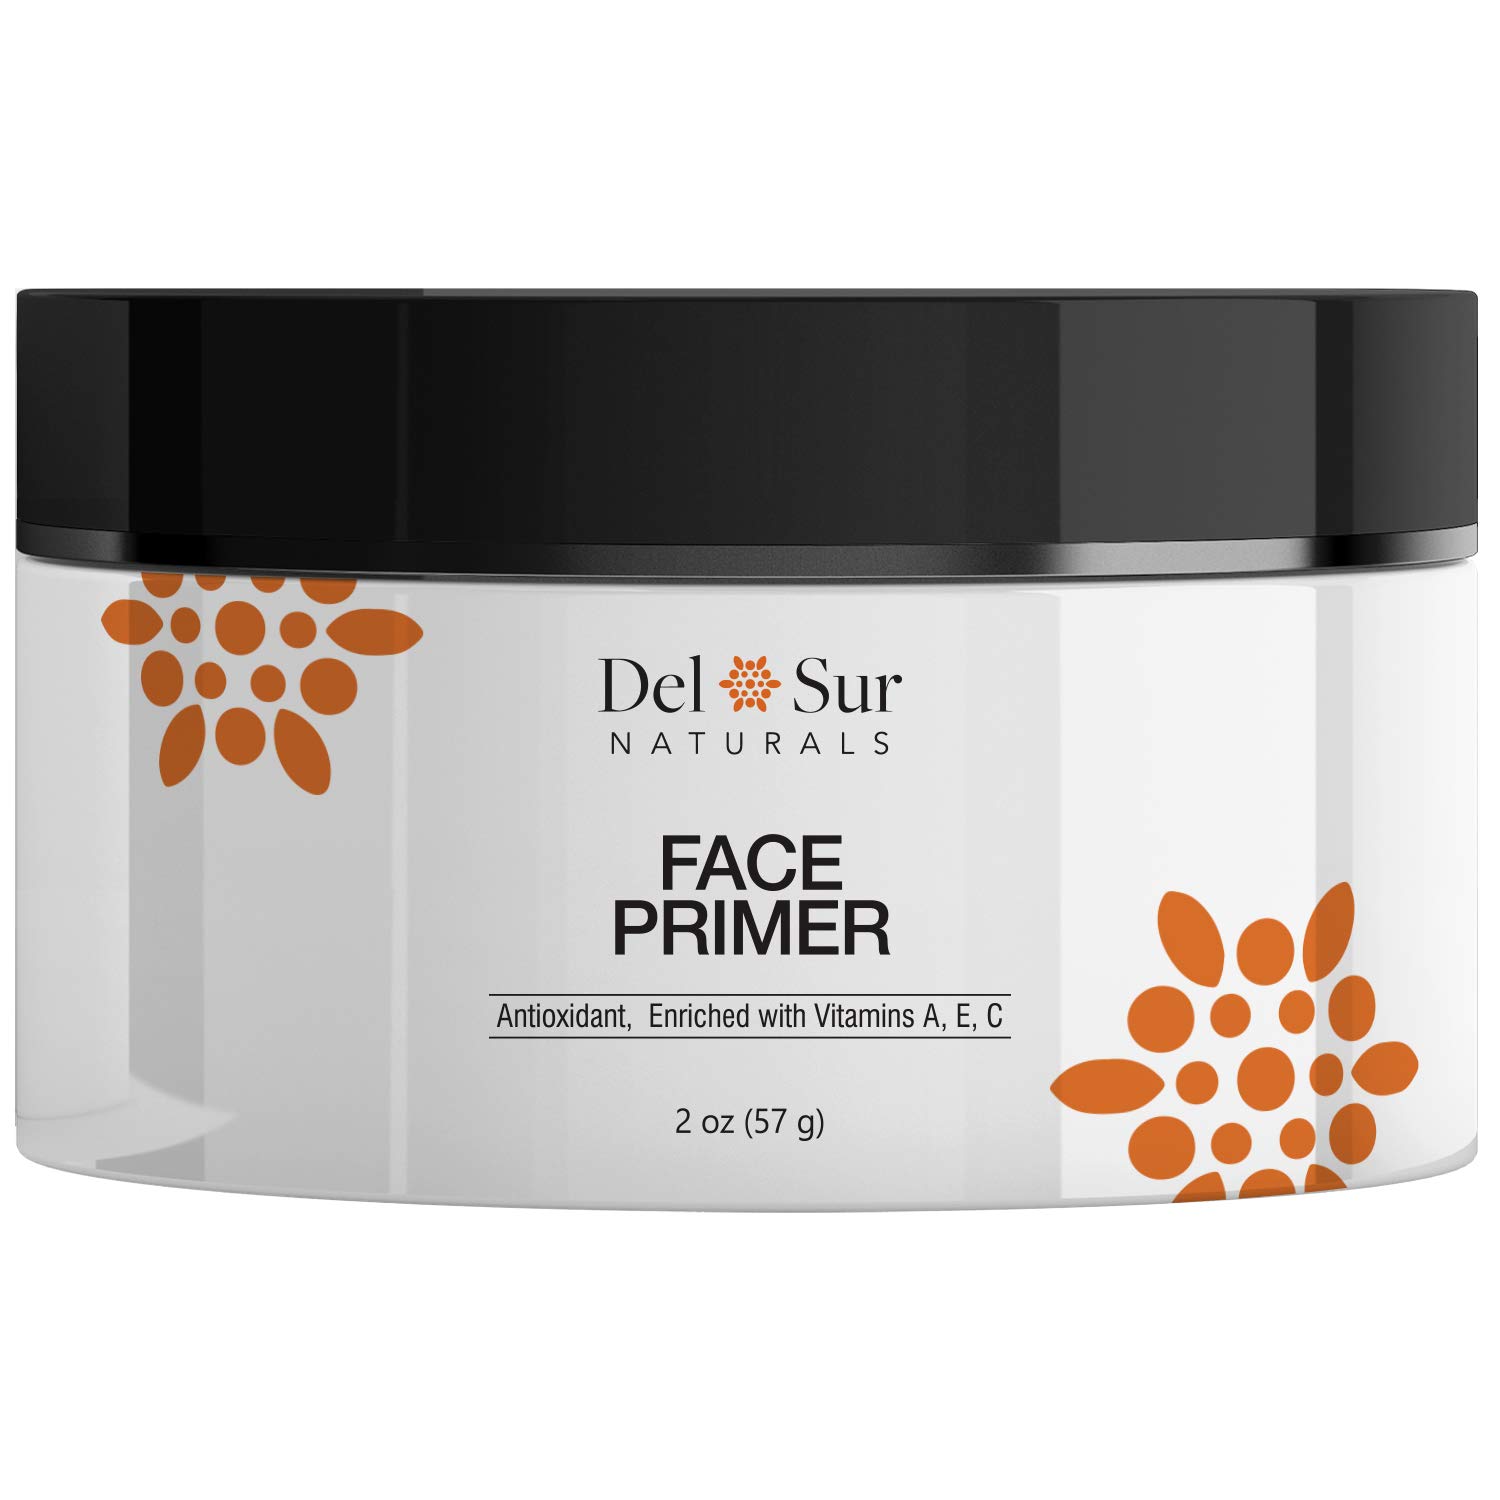  Del Sur Naturals Face Primer & Pore Minimizer - with Antioxidants, Vitamin A, E, C and Micro Minerals that Reduce Pore Size & Control Excess Shine - Non-oily Formula Evens Out Skin